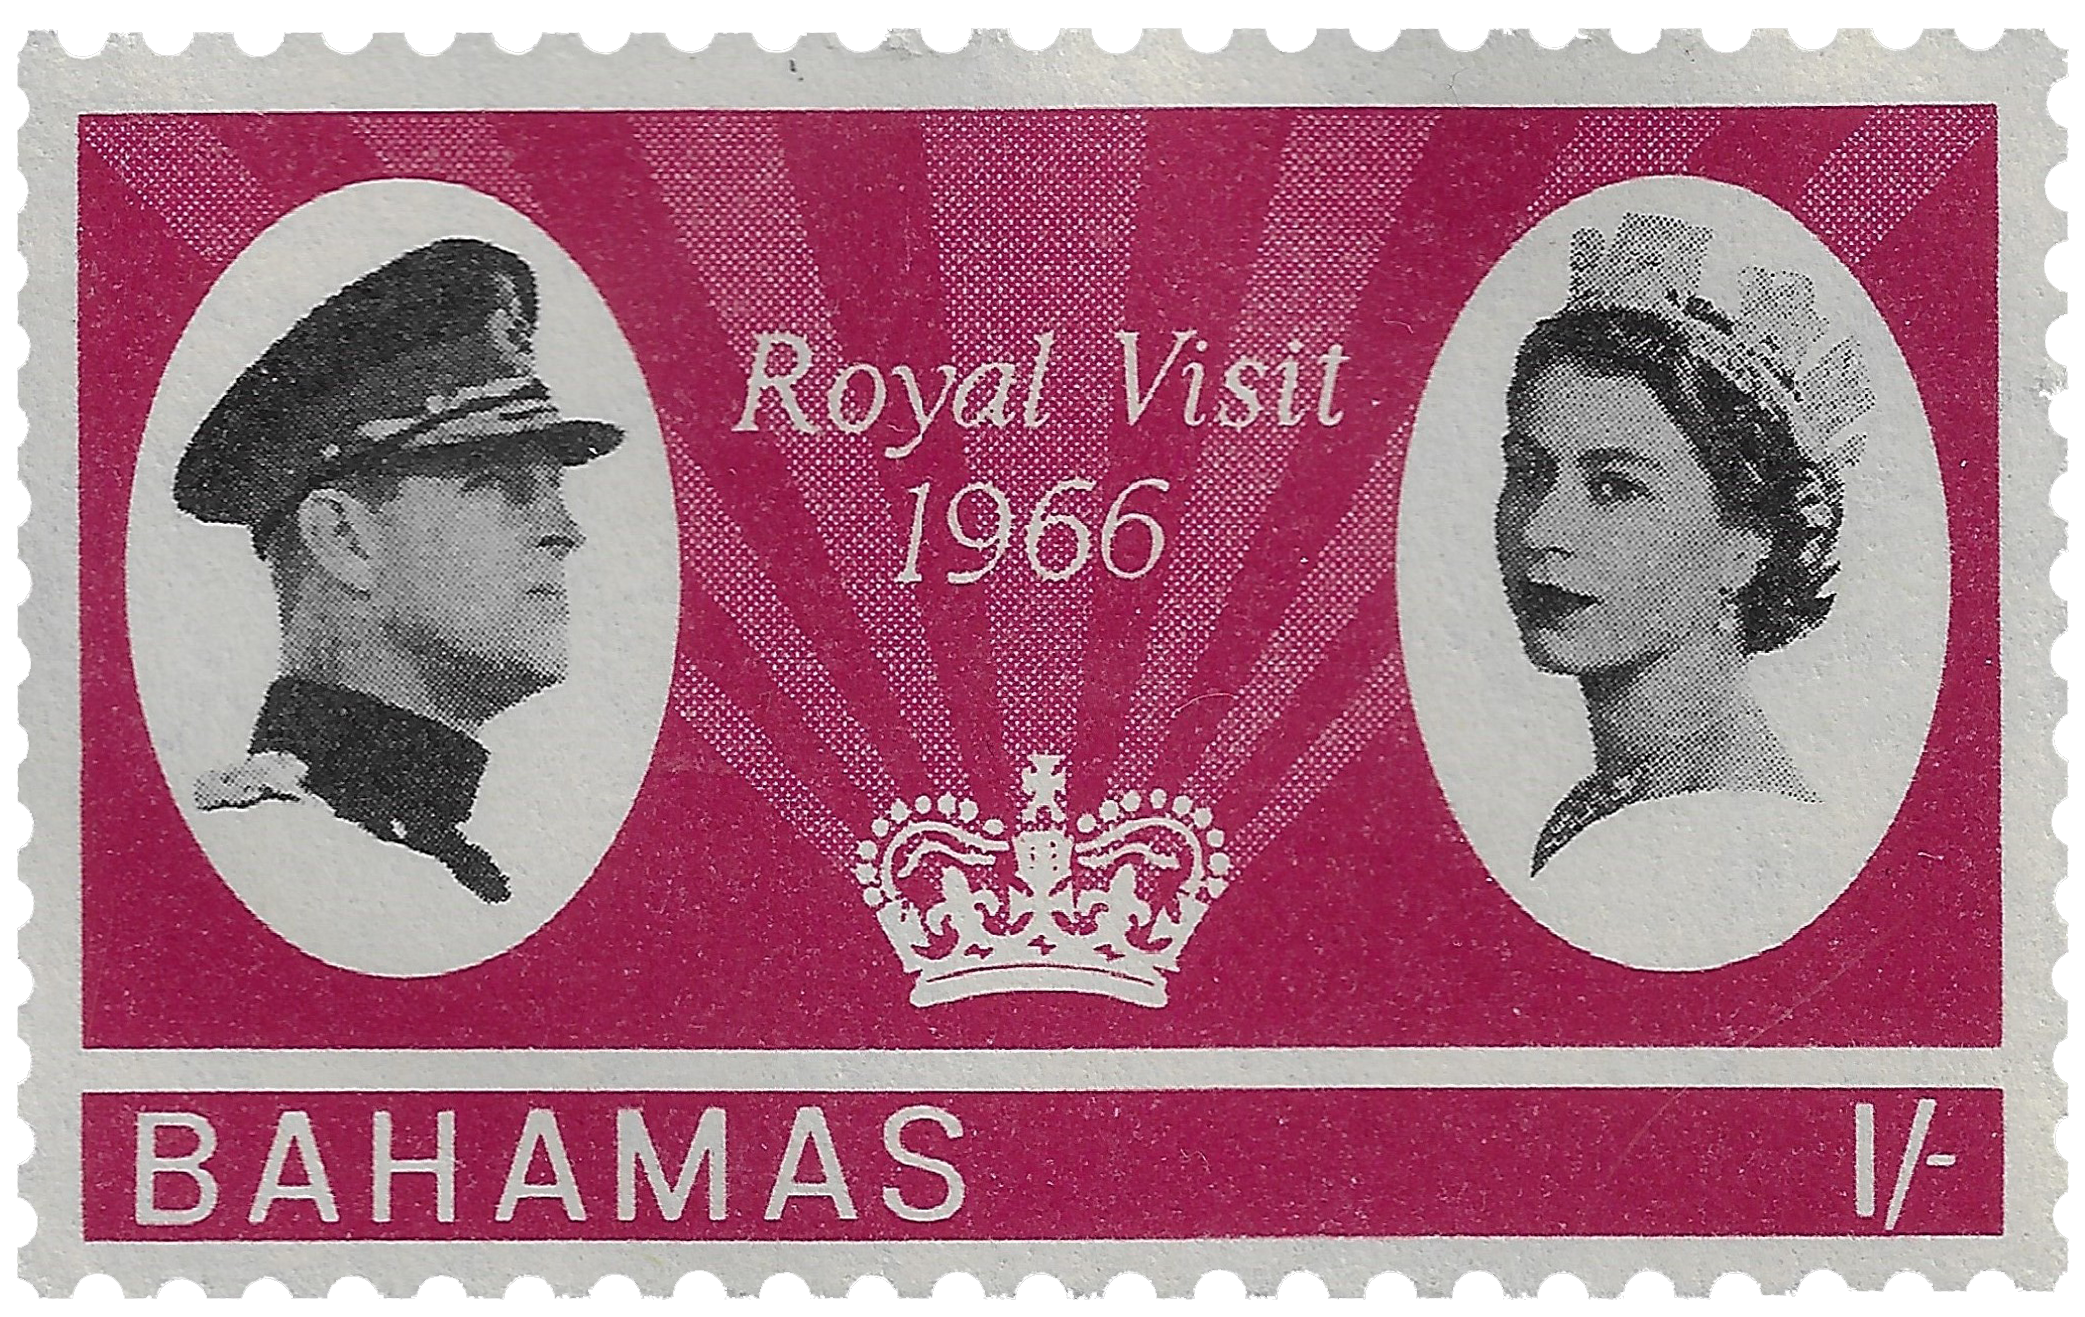 1s 1966, Royal Visit